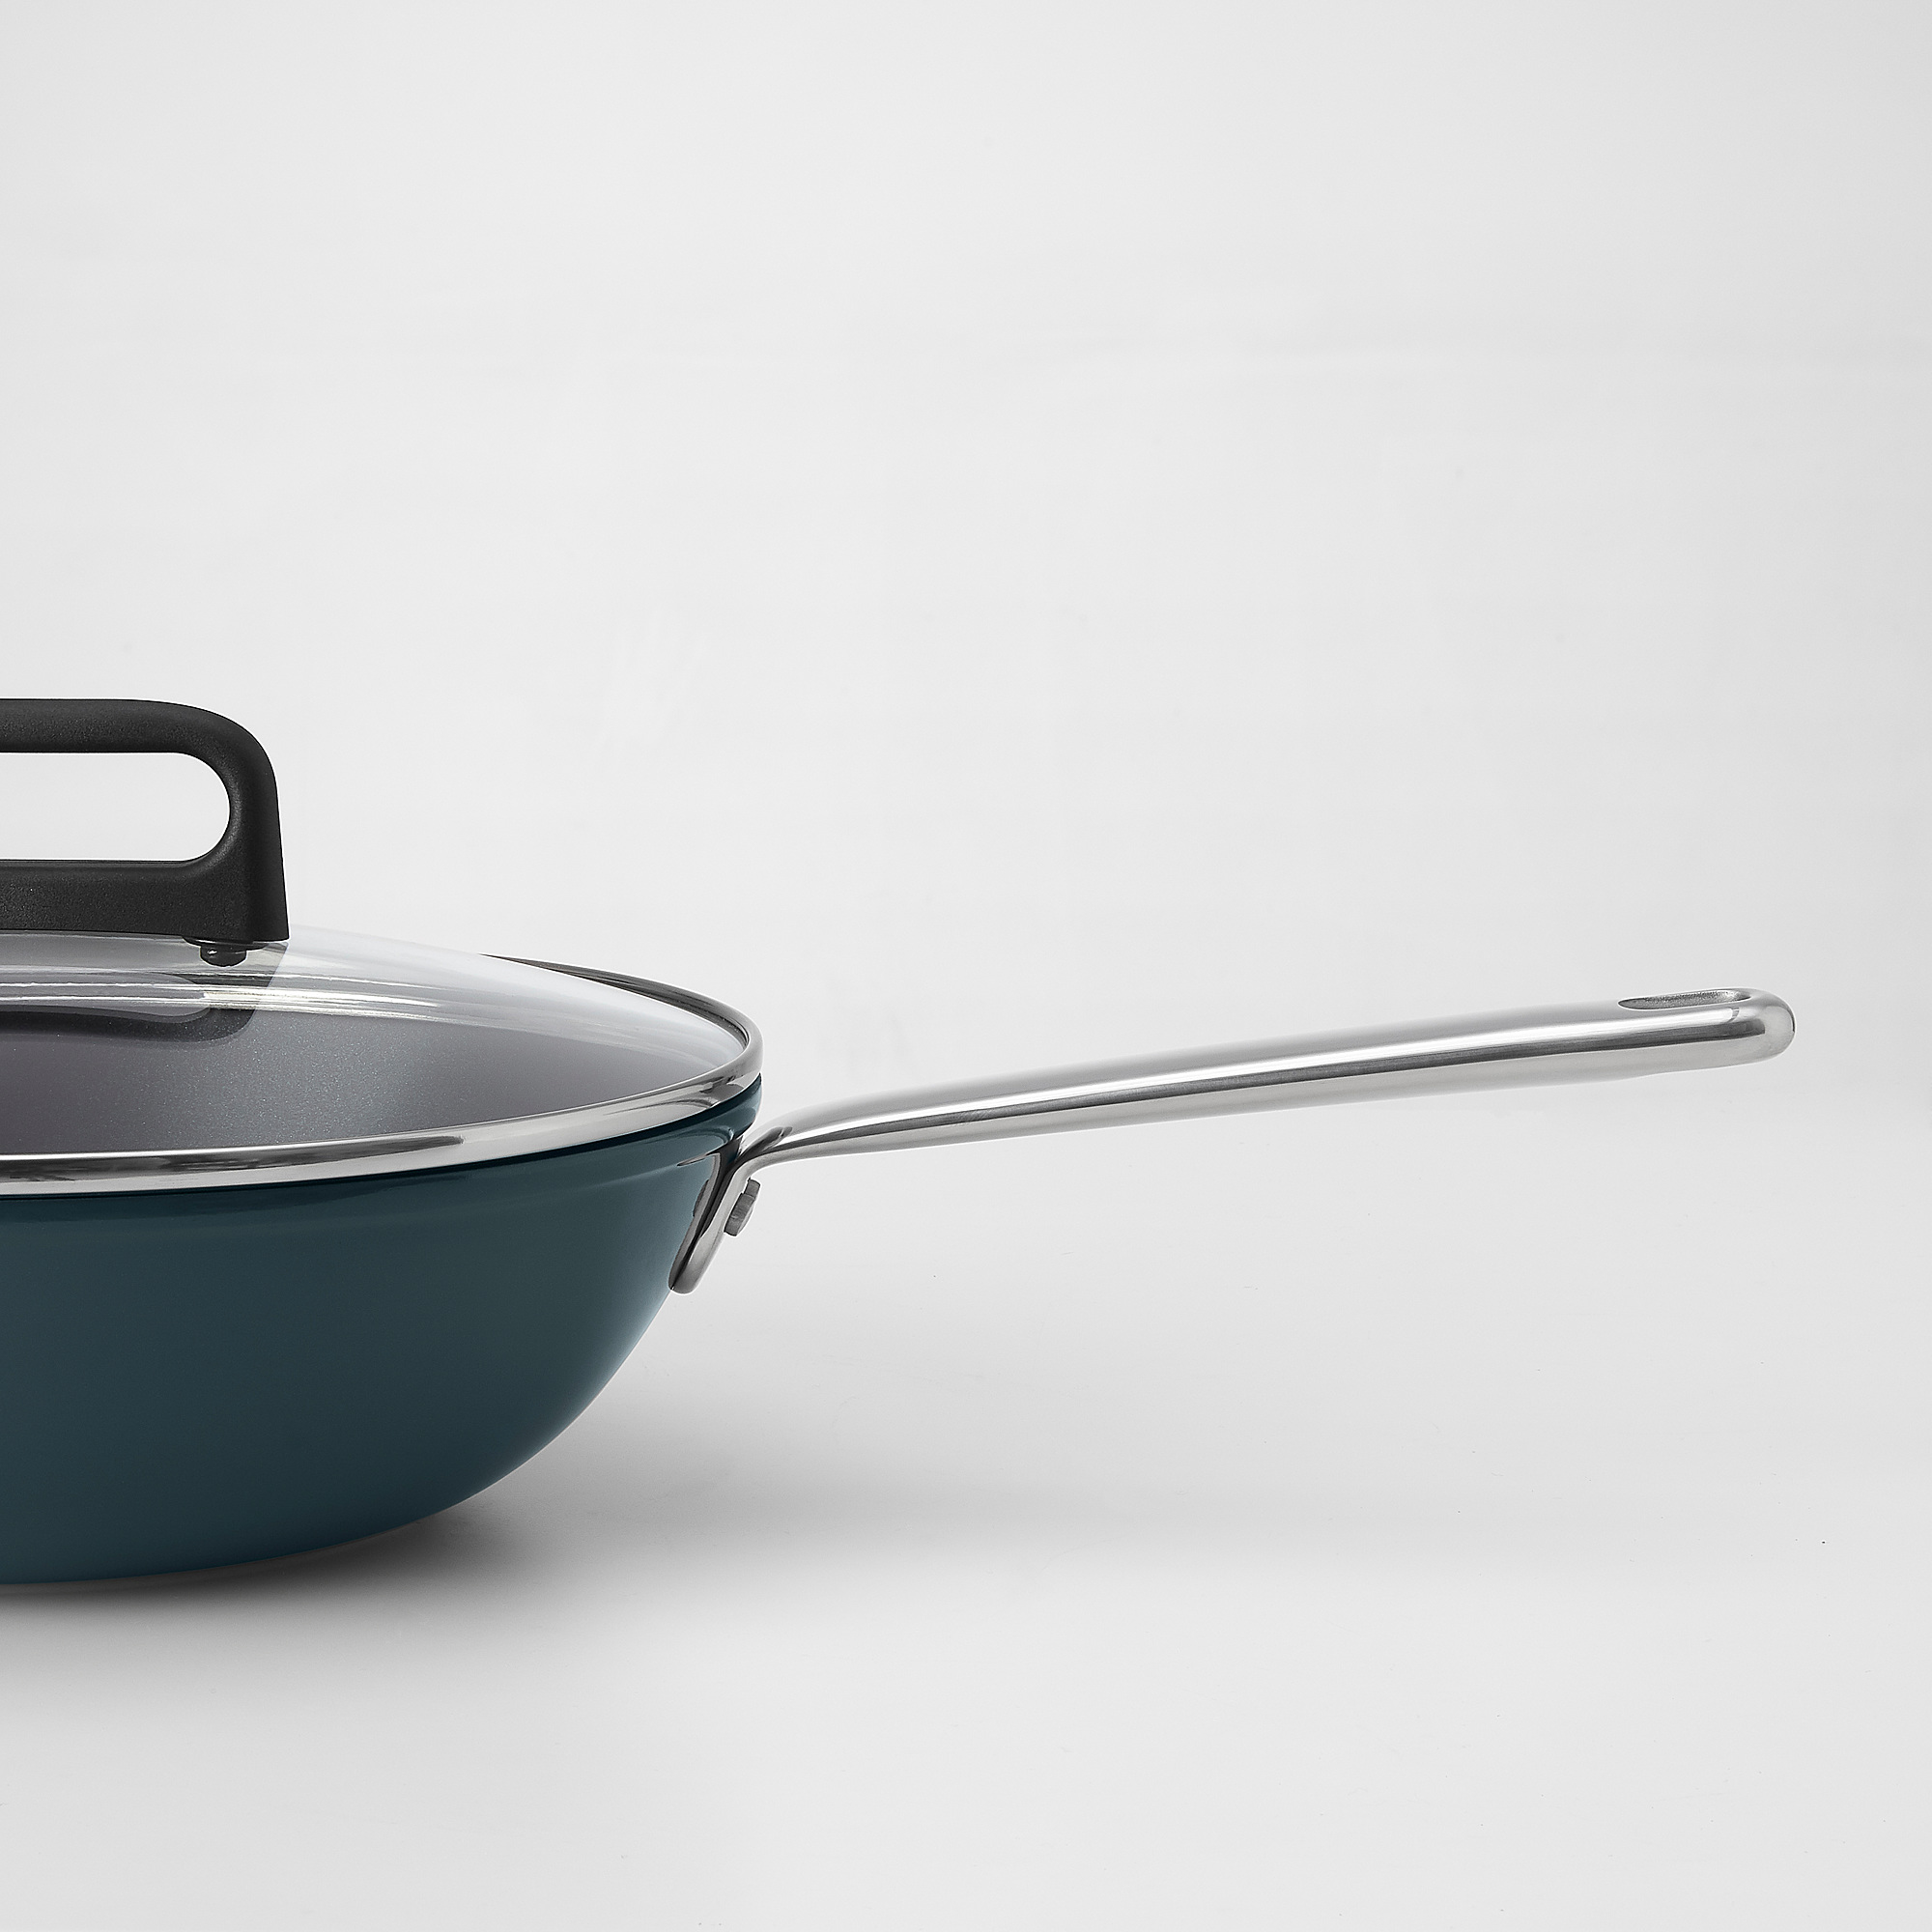 SILVERLAX wok with lid